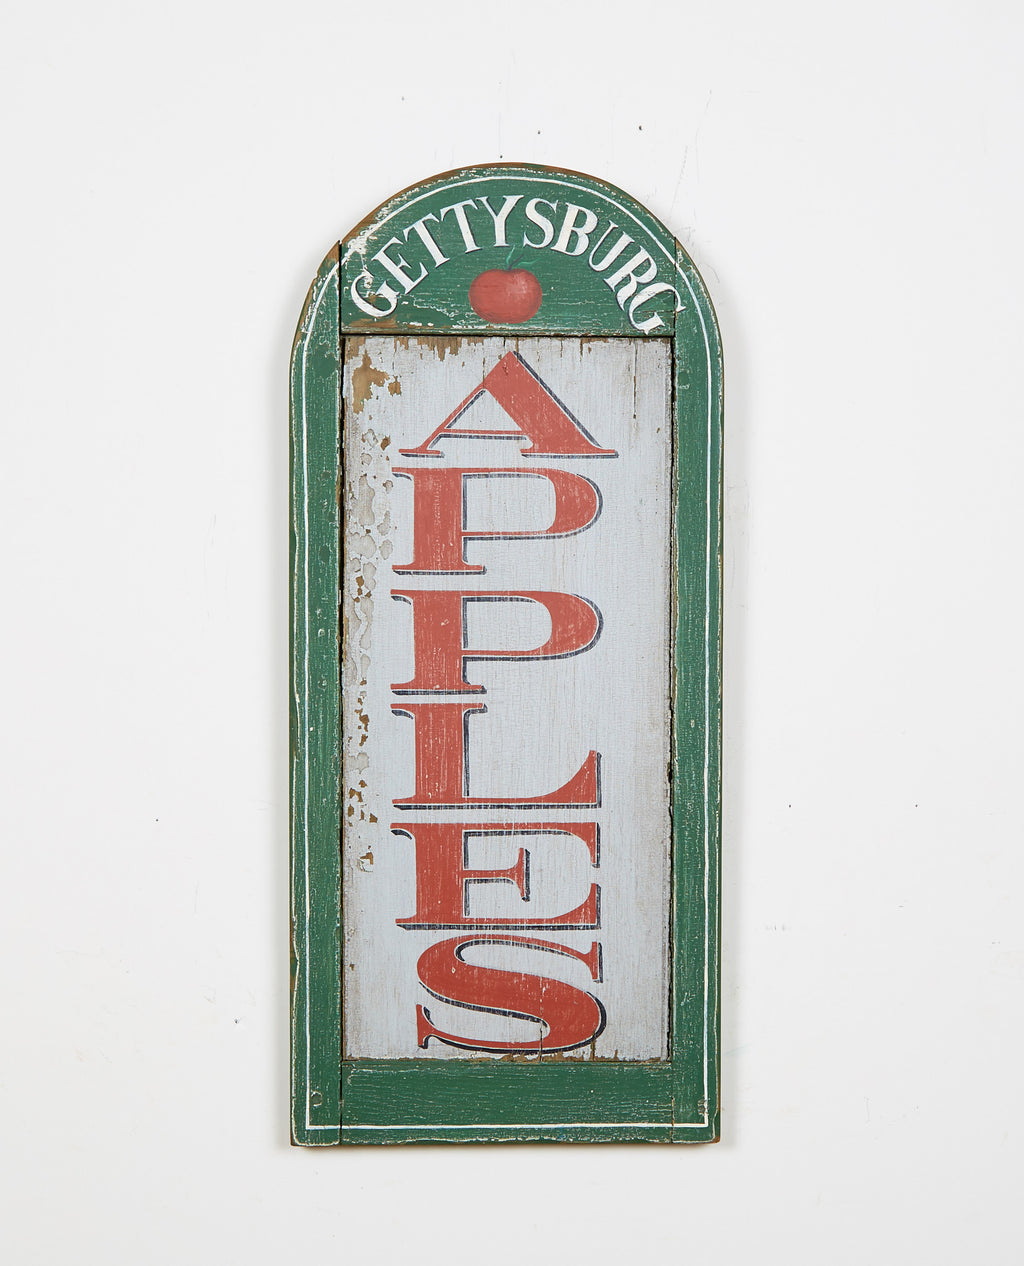 Gettysburg Apples, Old Shutter/Round Top Americana Art